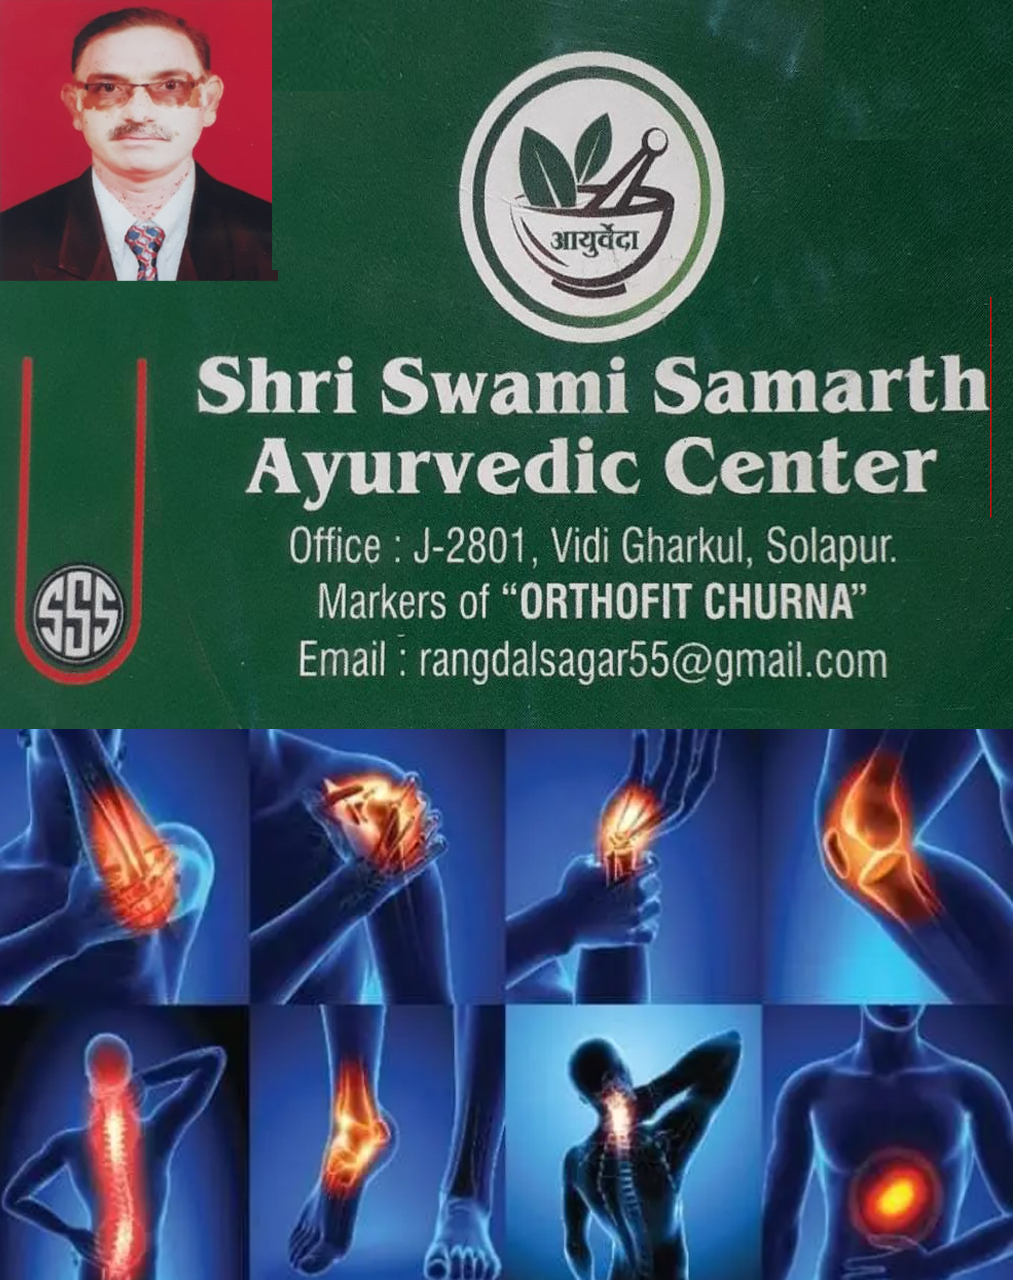 Shri Swami Samarth Ayurvedic Center